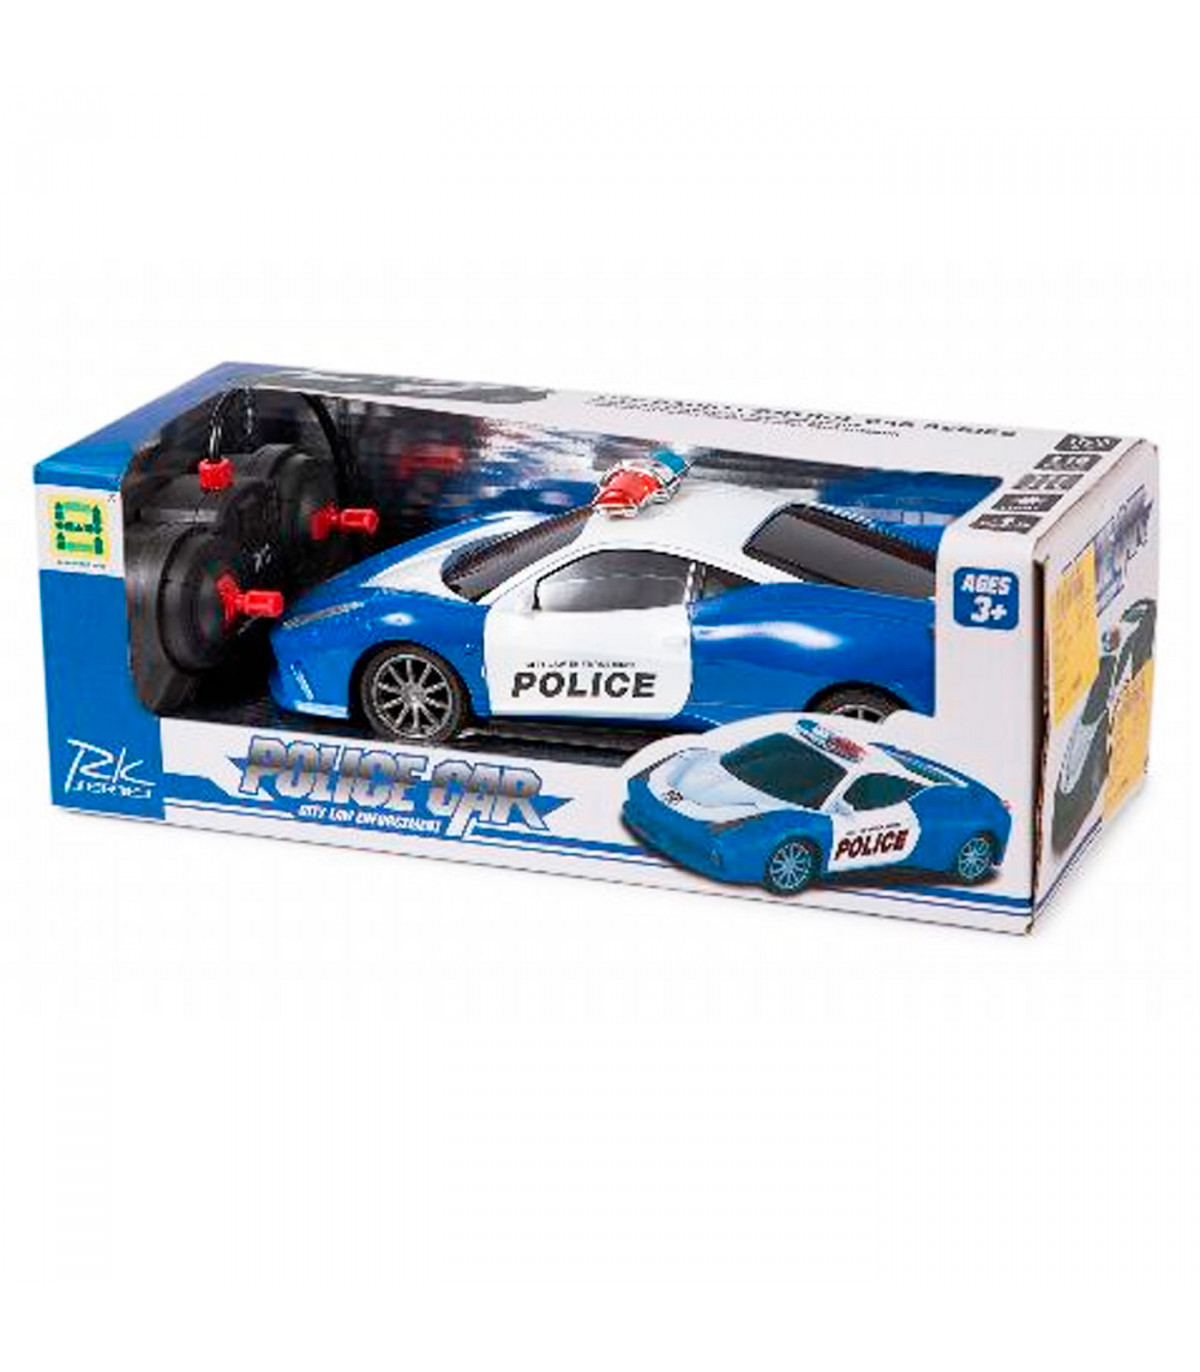 Juguete coche policía con control remoto, coche deportivo policía con  luces, escala 1:16, medidas: 8 x 23 x 10 cm